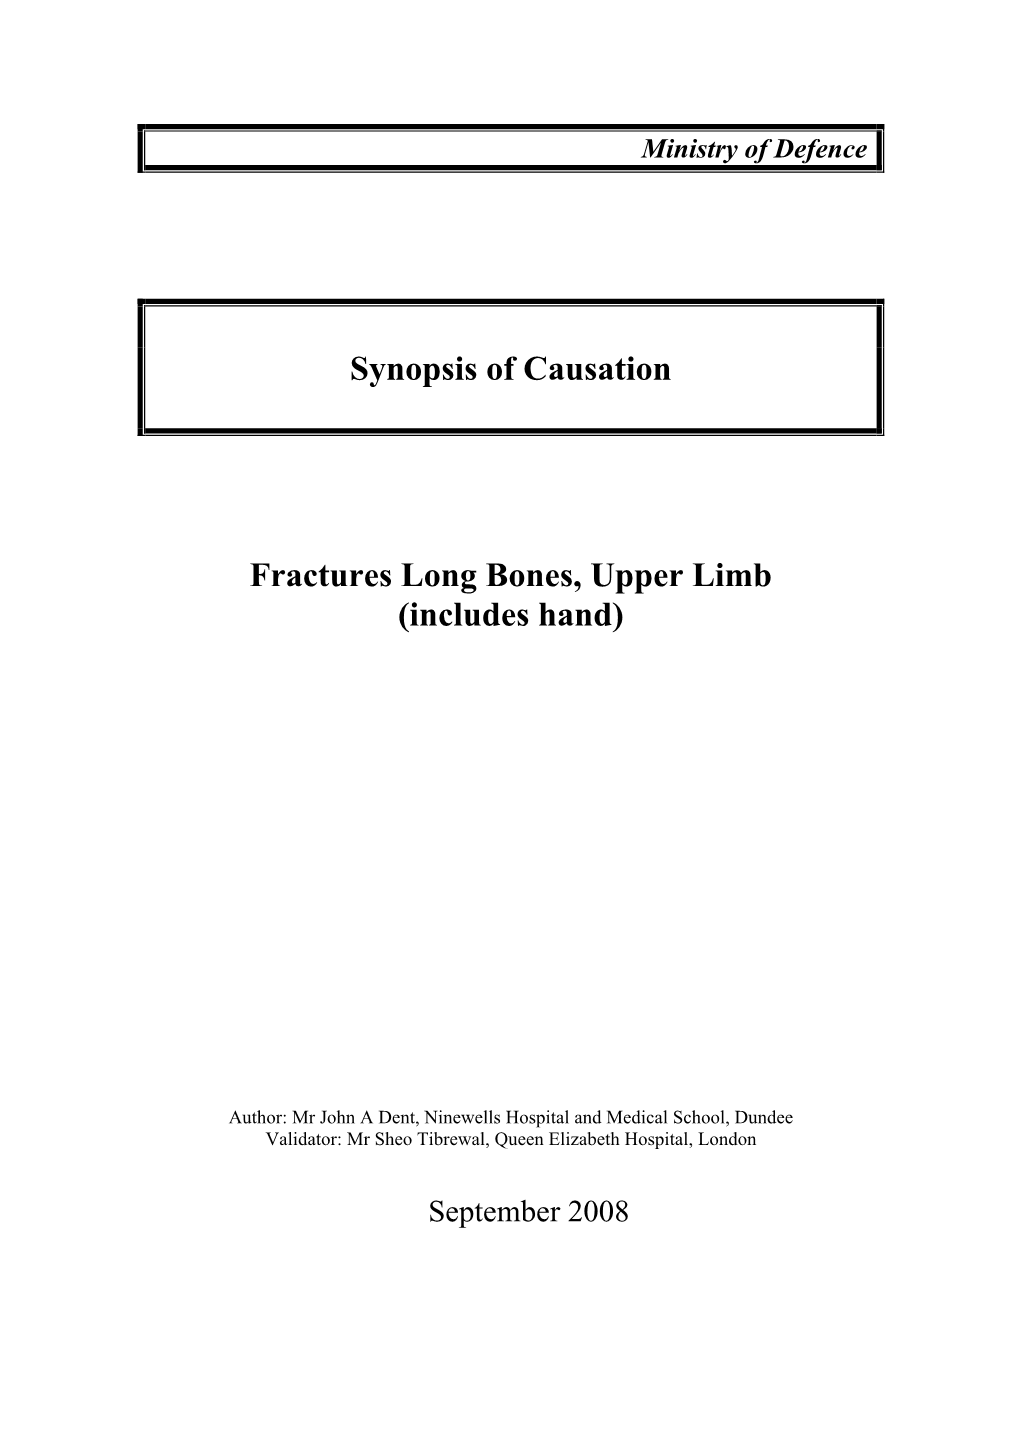 Fractures Long Bones, Upper Limb (Includes Hand)